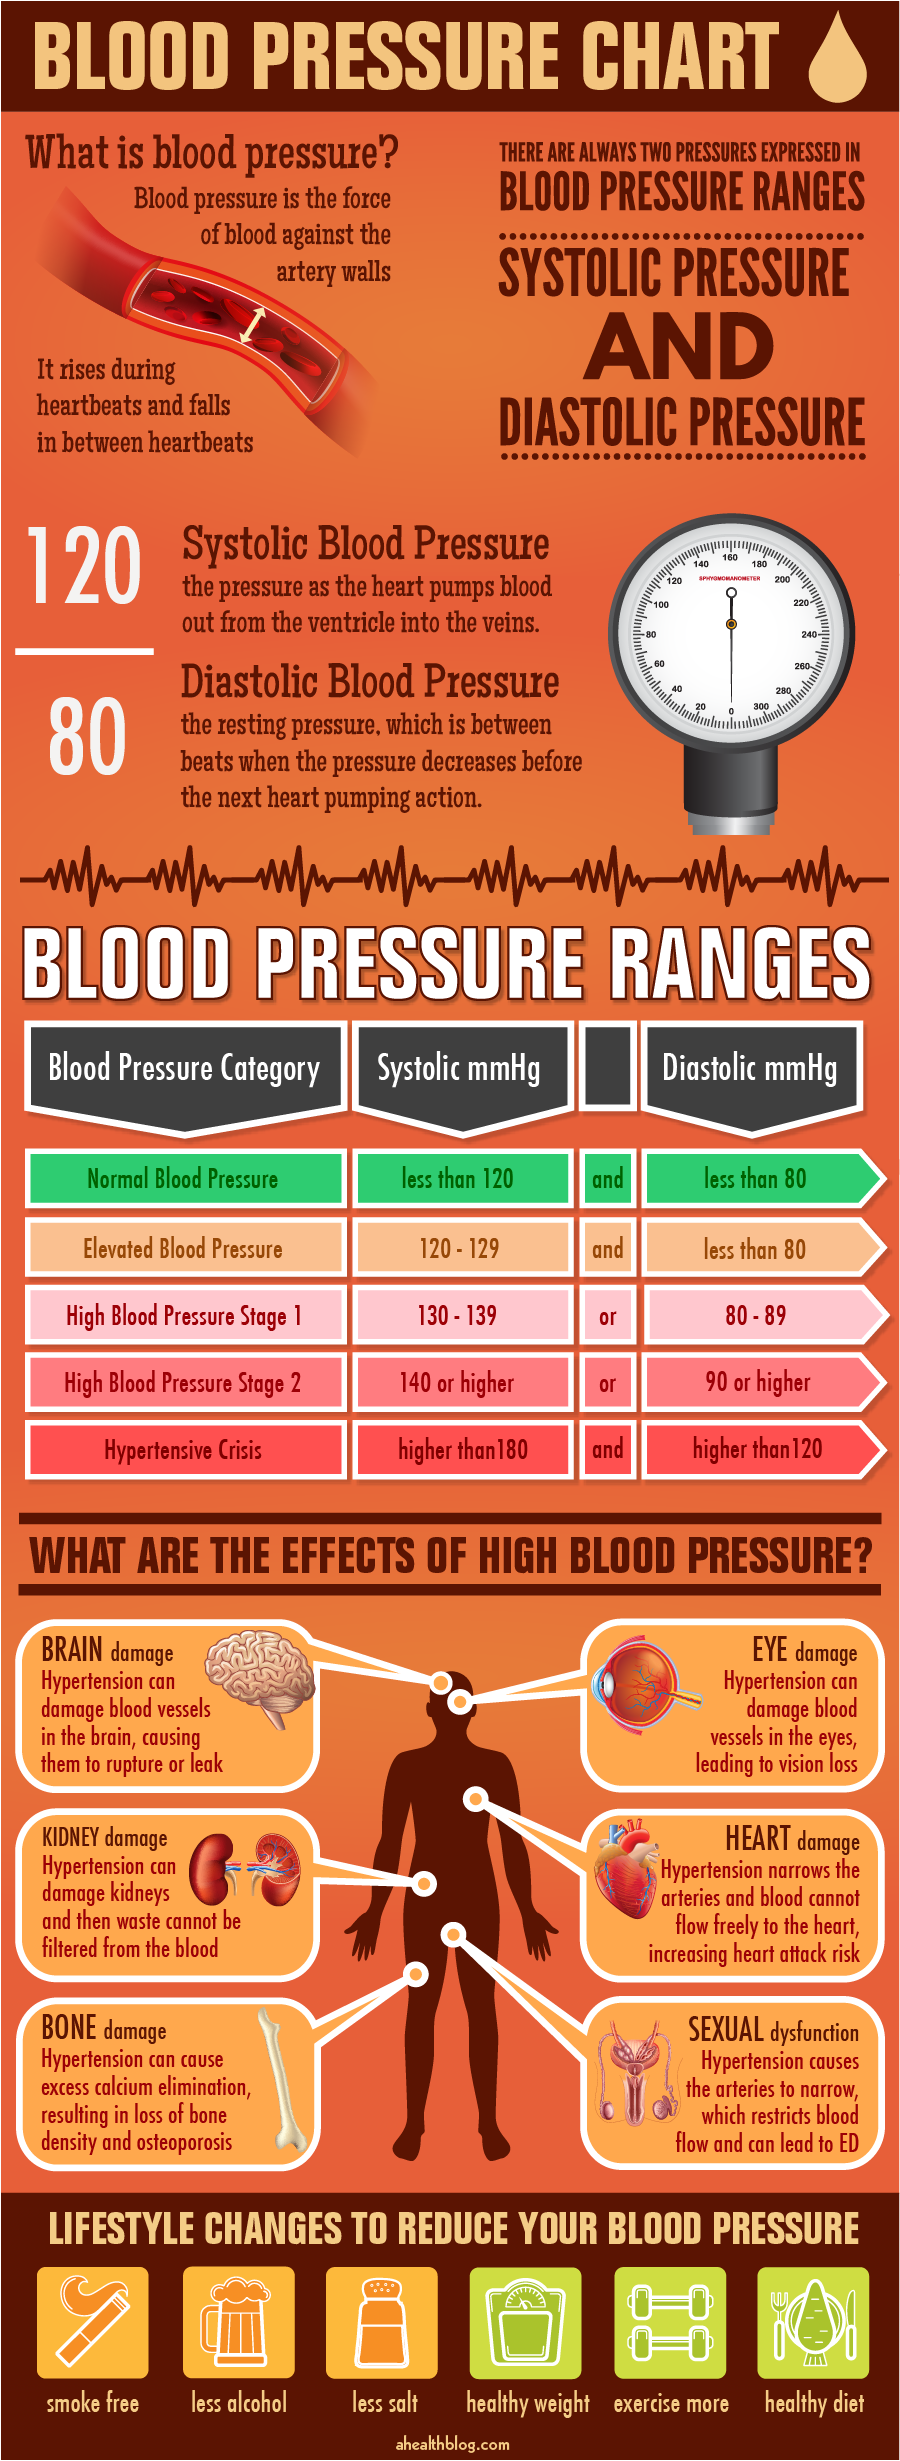 A Blood Pressure Chart